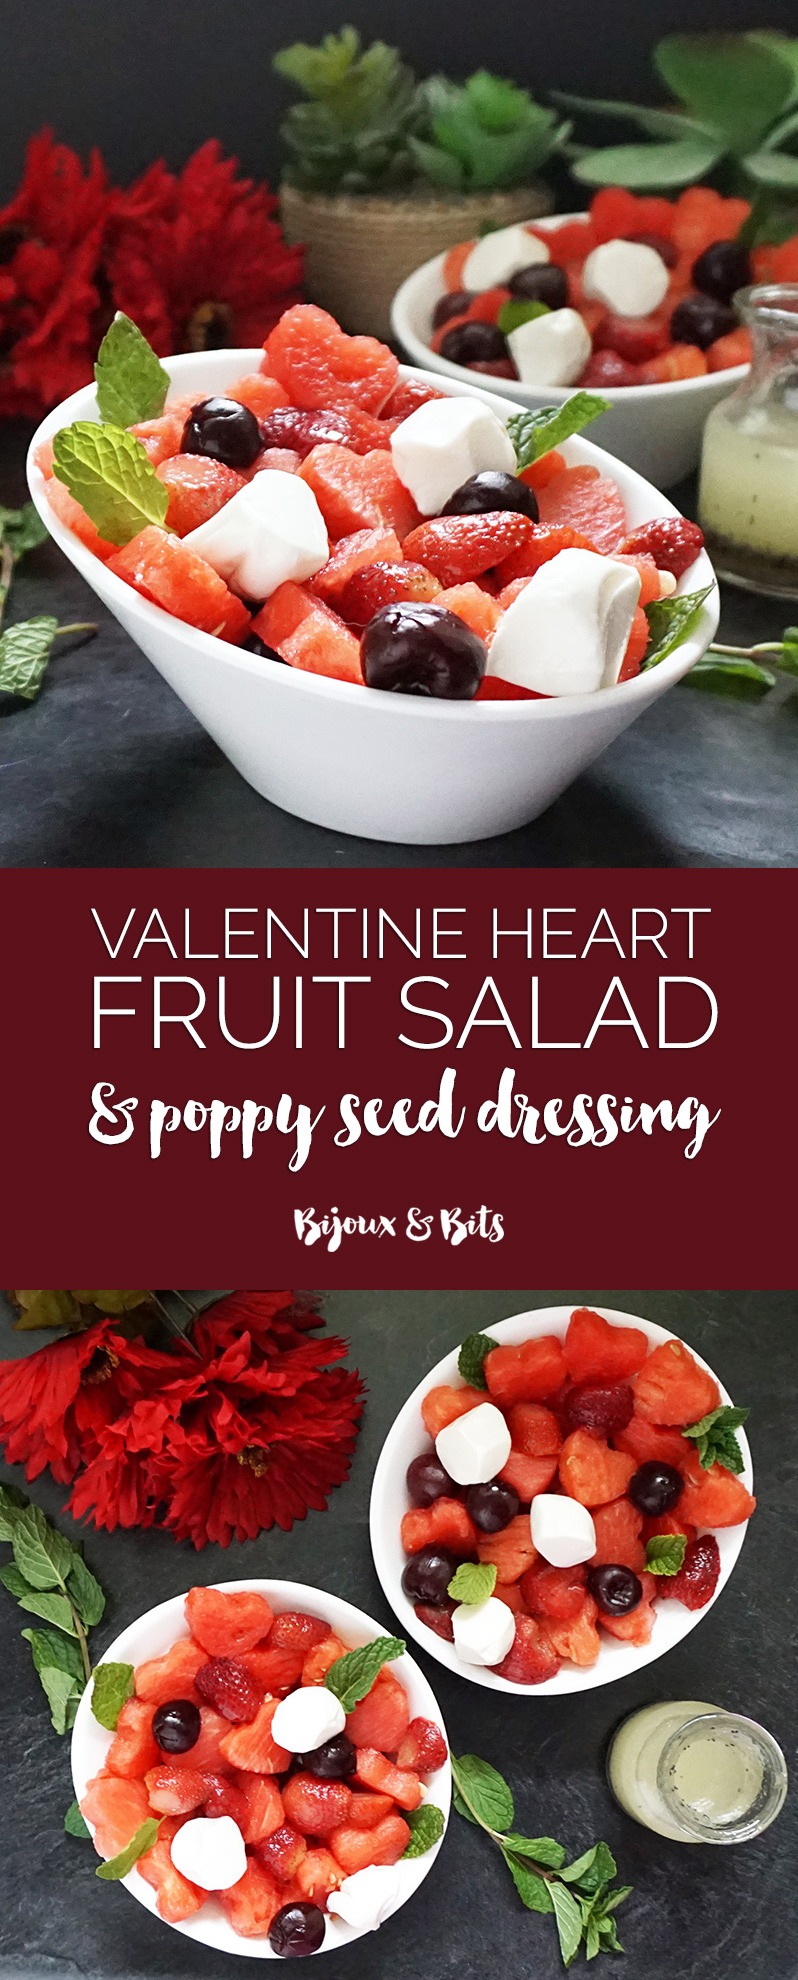 Valentine heart fruit salad with lemon poppy seed dressing from @bijouxandbits #valentinesday #fruitsalad